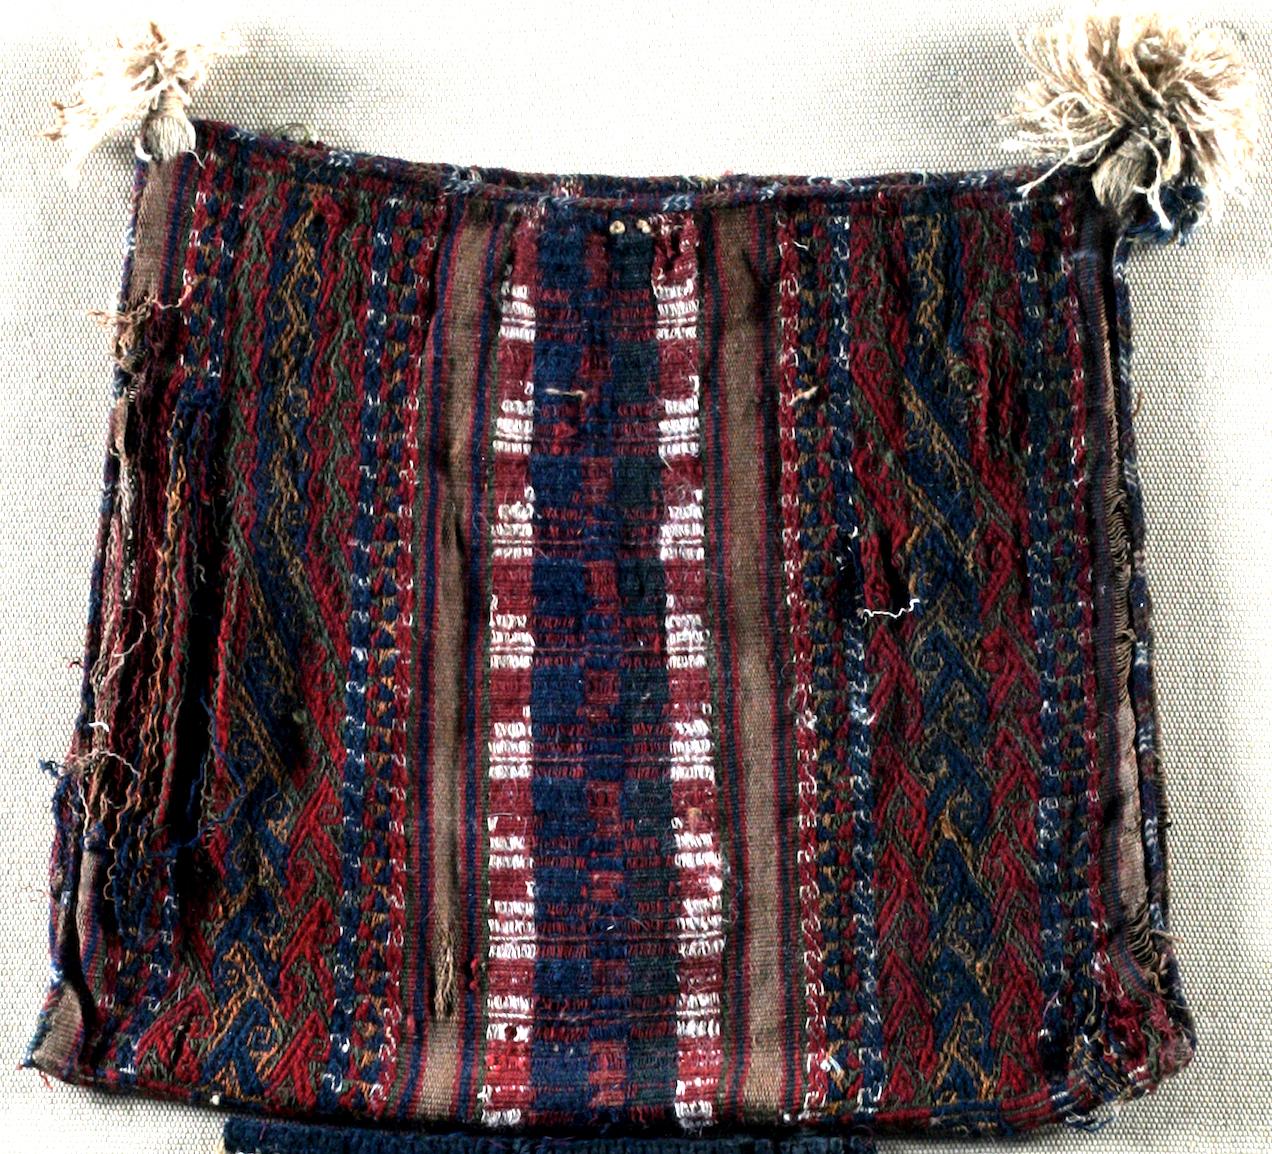 18th Century and Earlier Pre-Columbian Textile Inca Multi-Color Shaman’s Coca Leaf Bag, Peru 1450-1532 AD